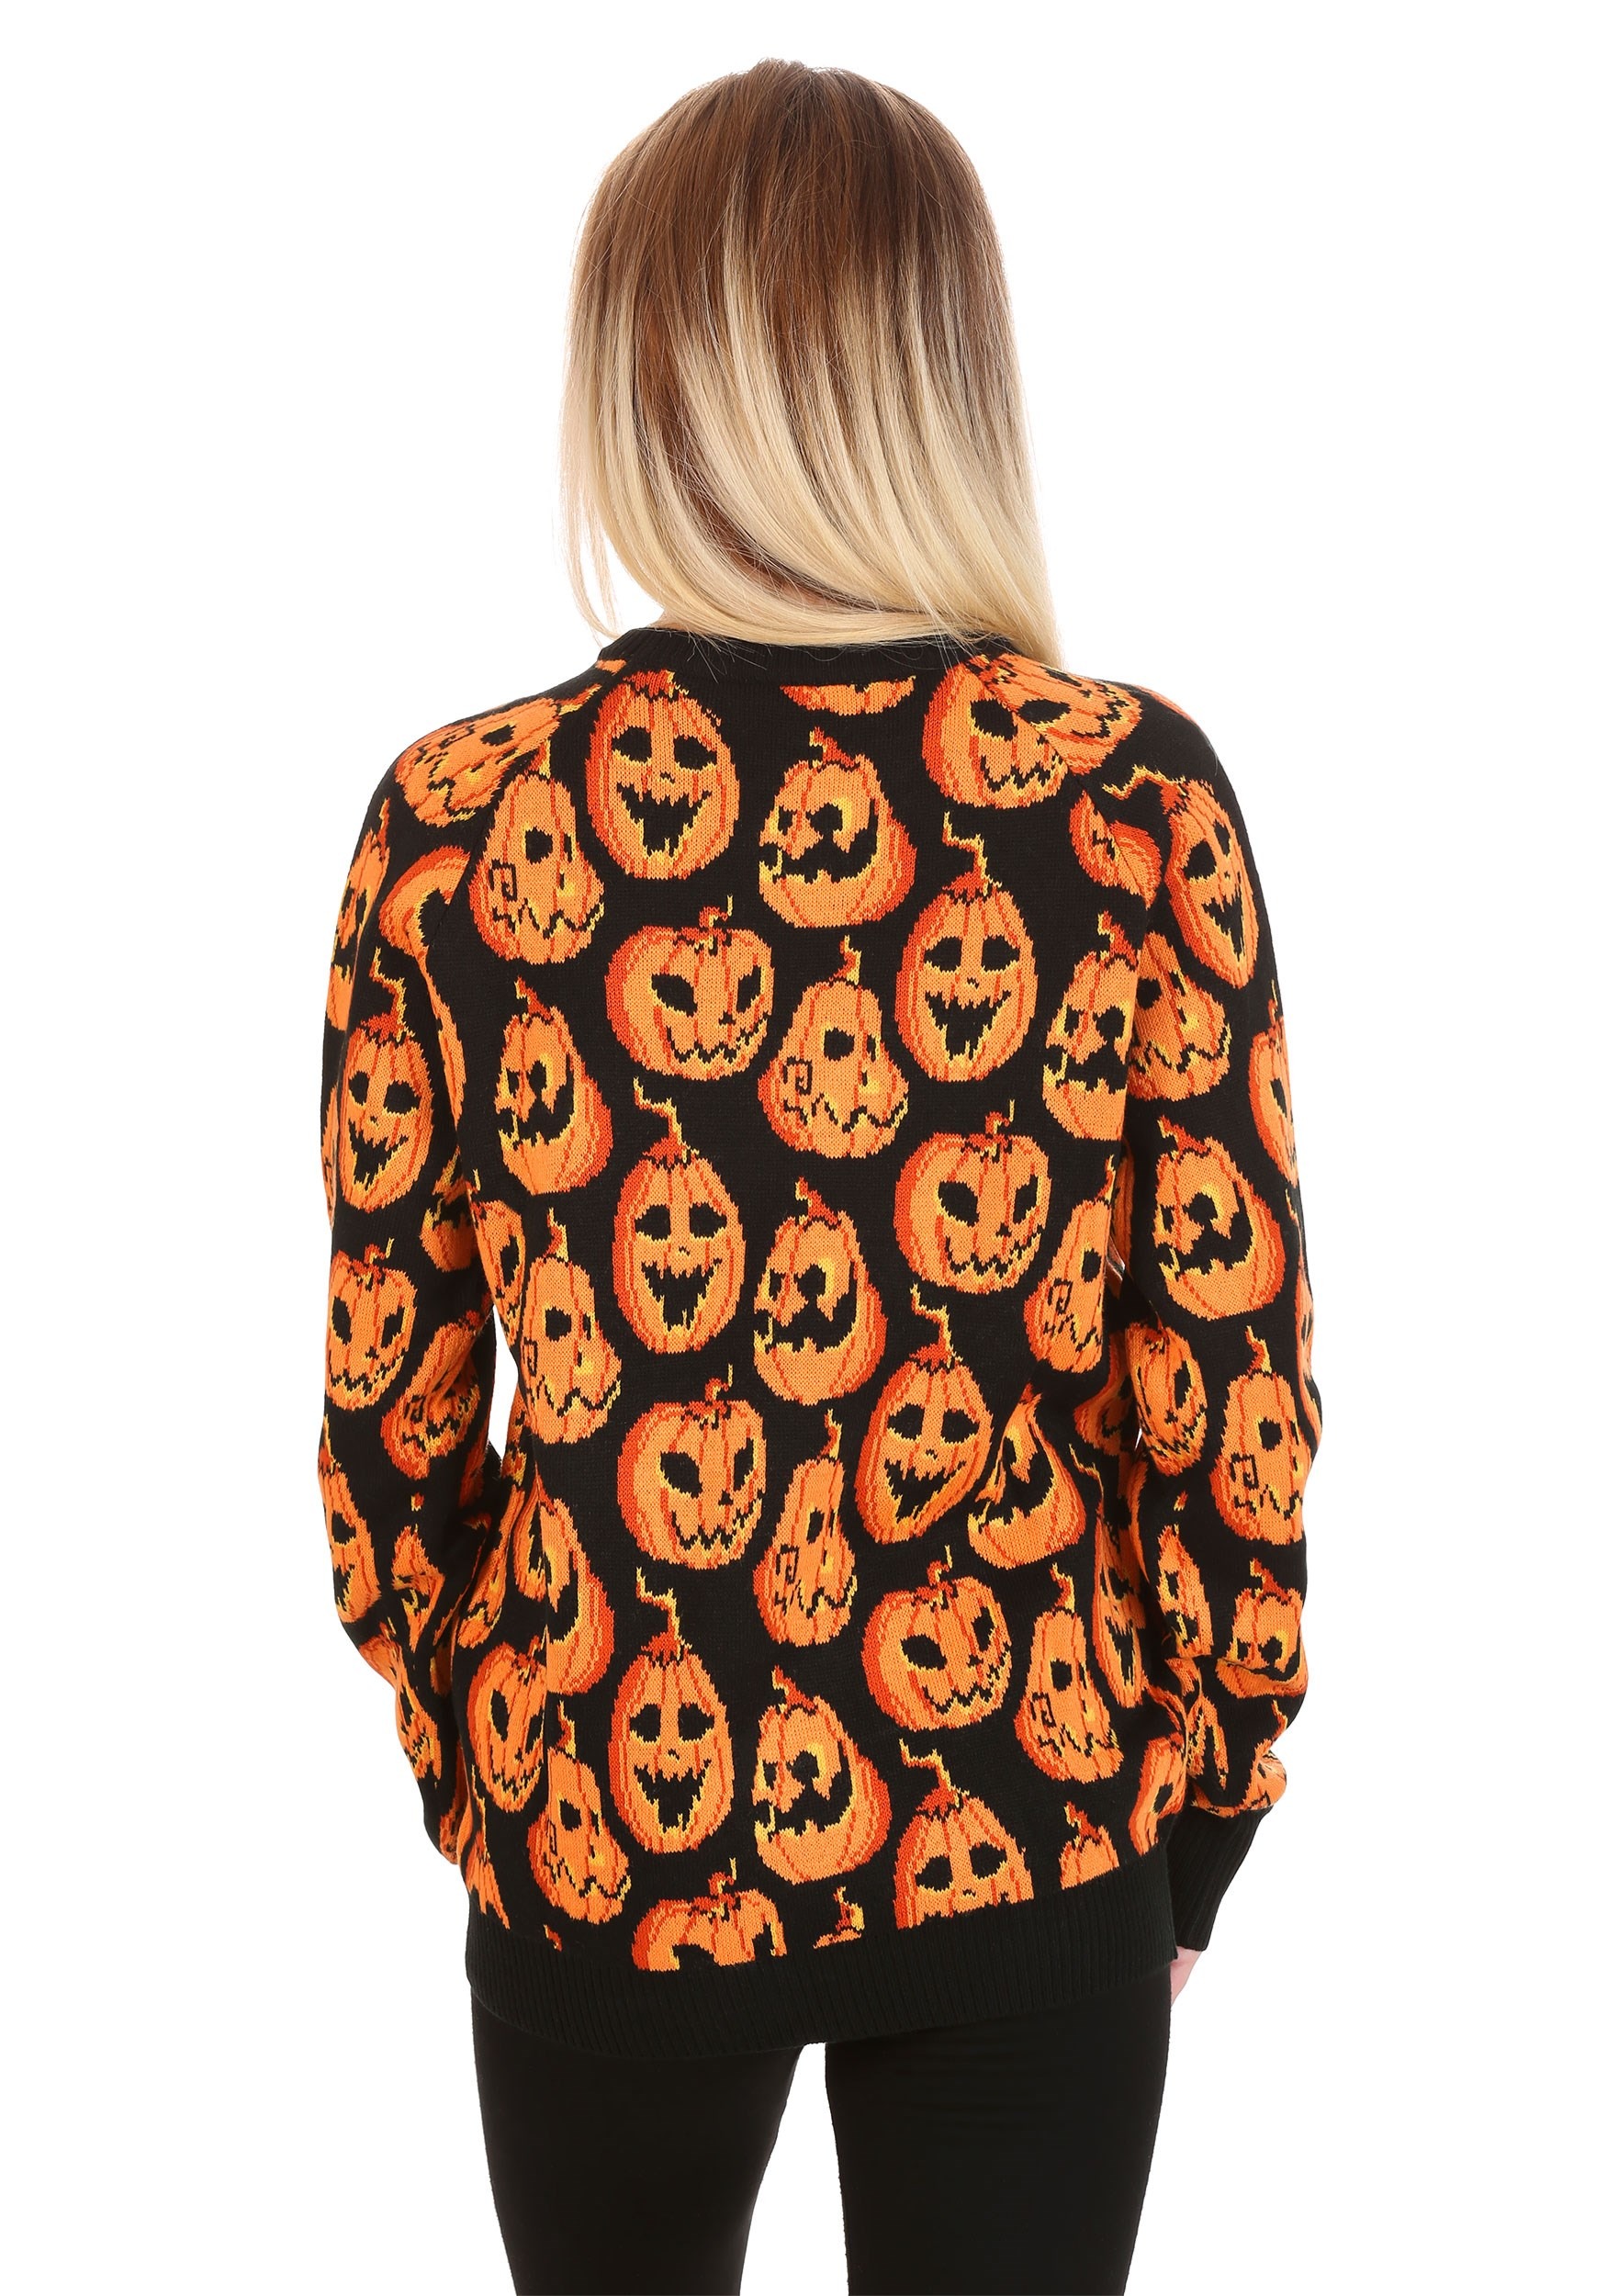 Pumpkin Frenzy Unisex Halloween Sweater